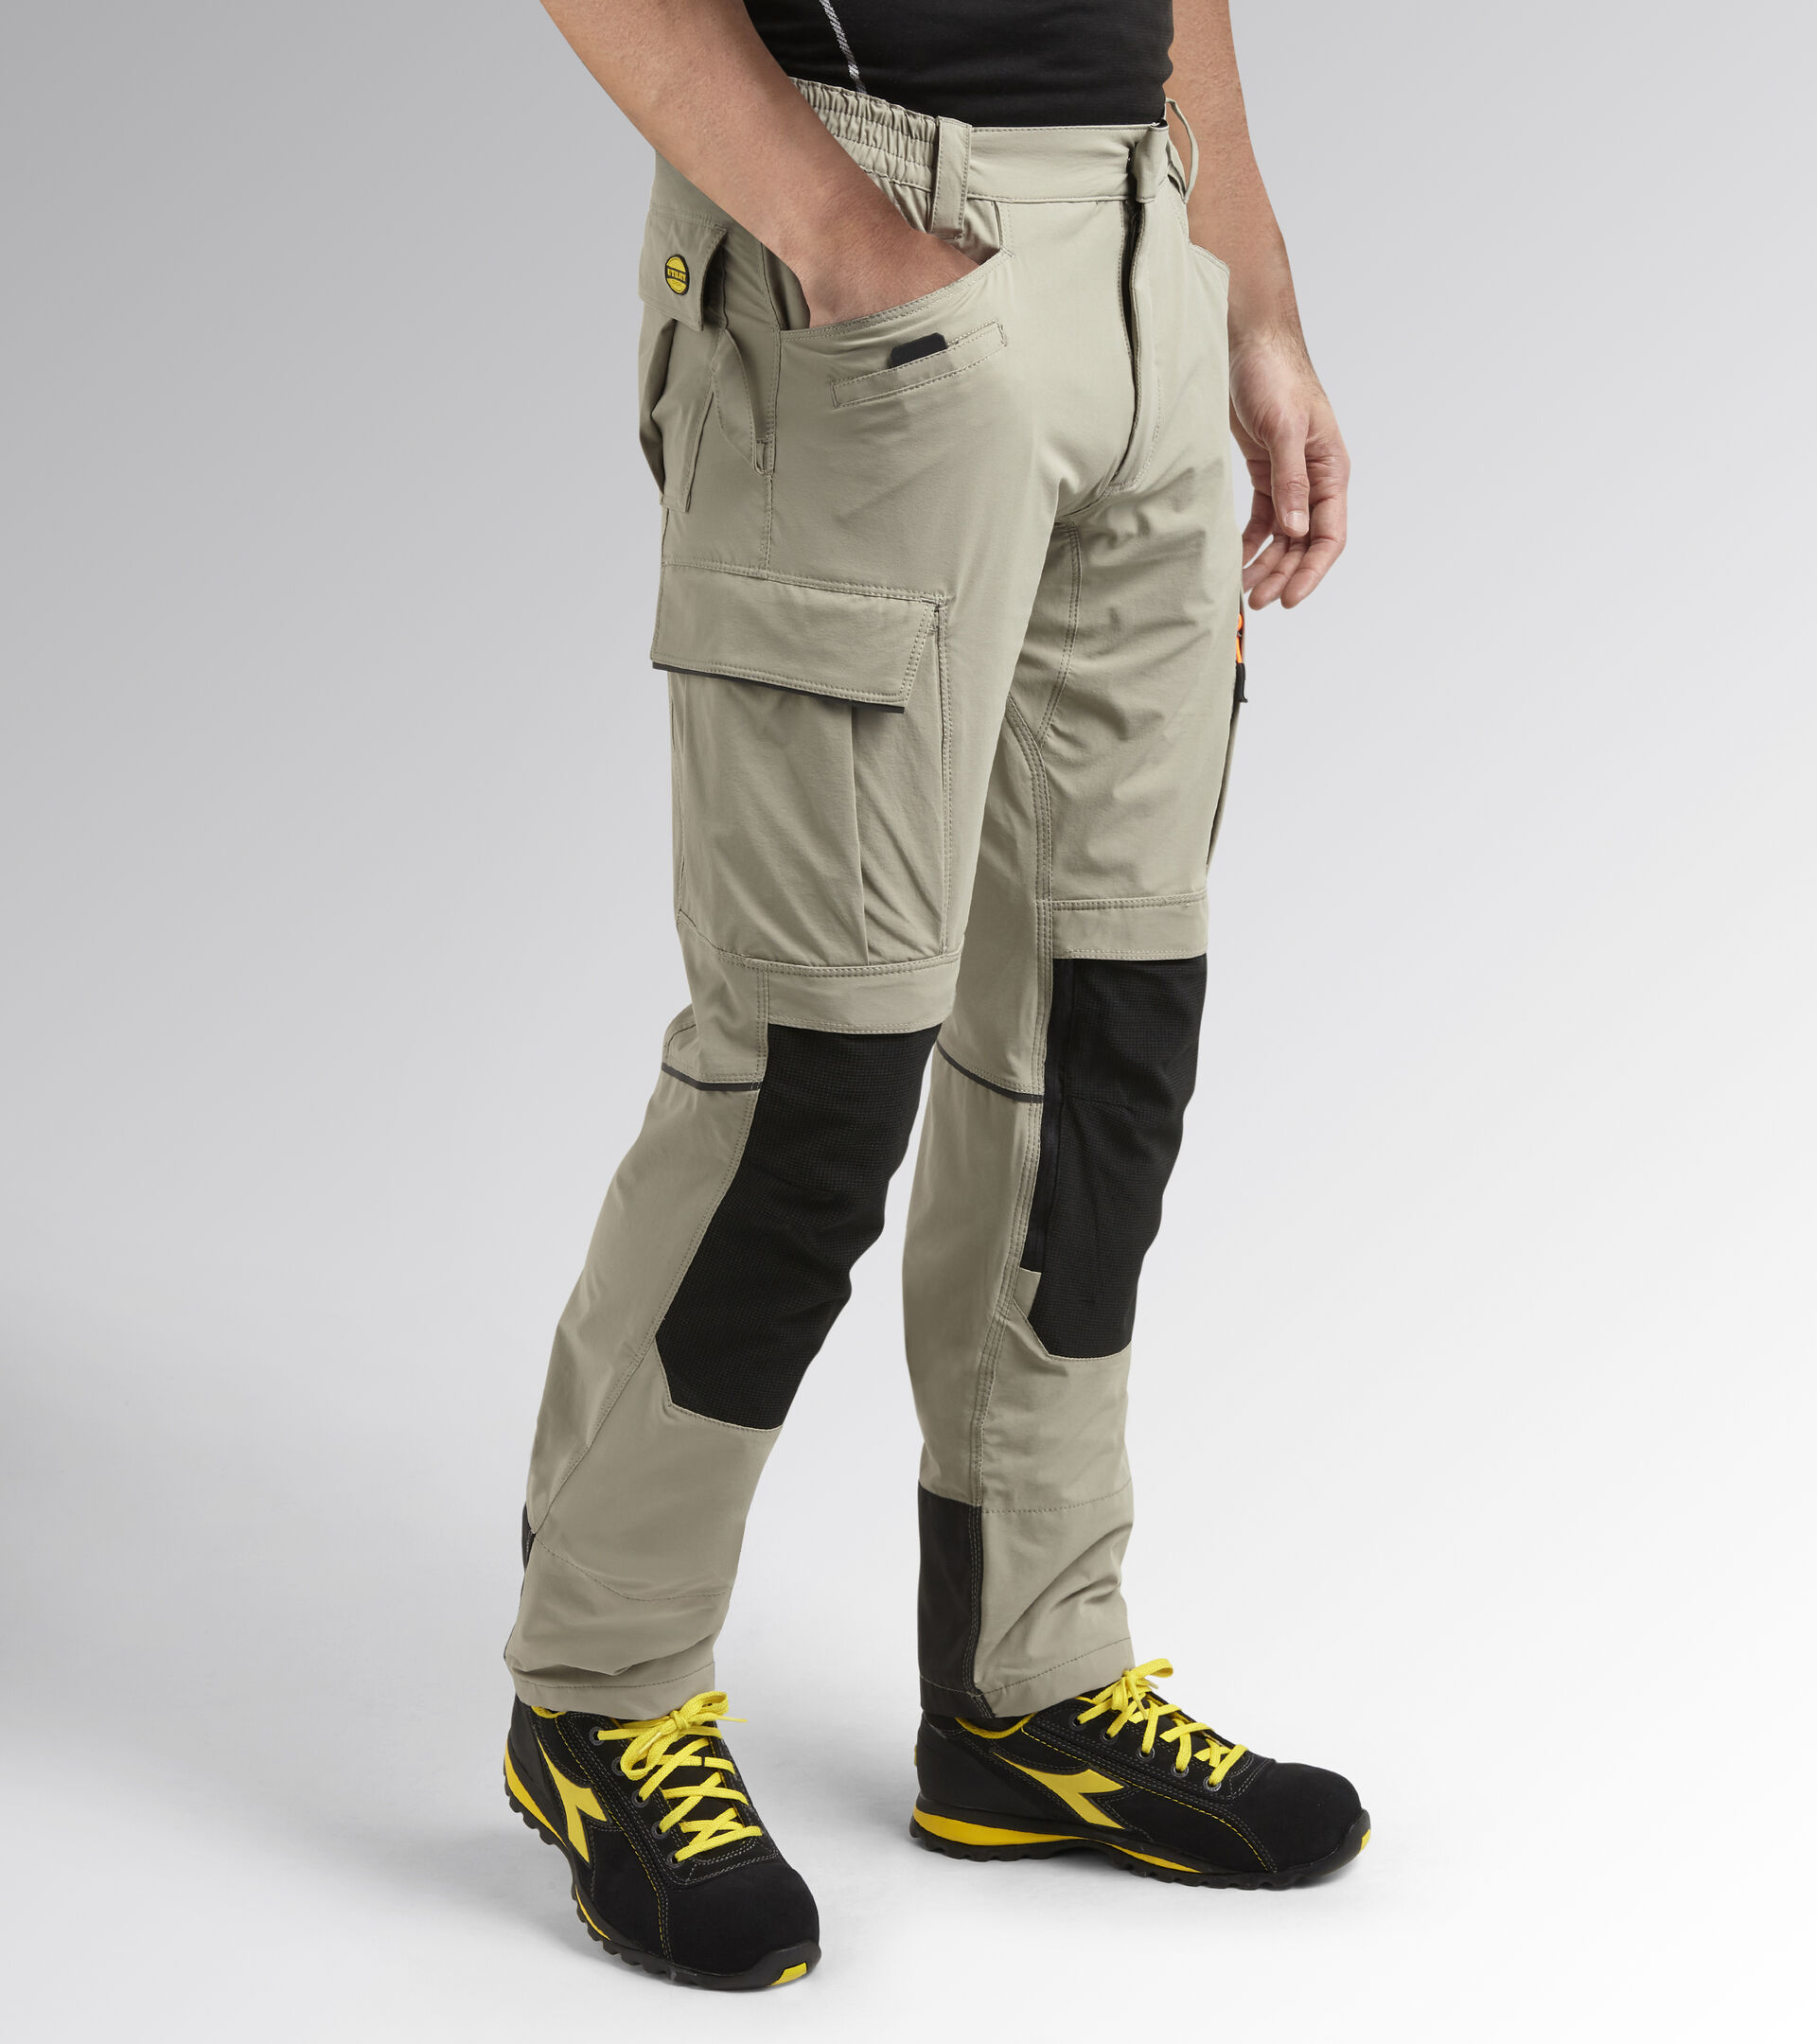 laser Stare Wide range PANT TECH PERFORMANCE Pantalone da lavoro - Diadora Utility Online Shop IT